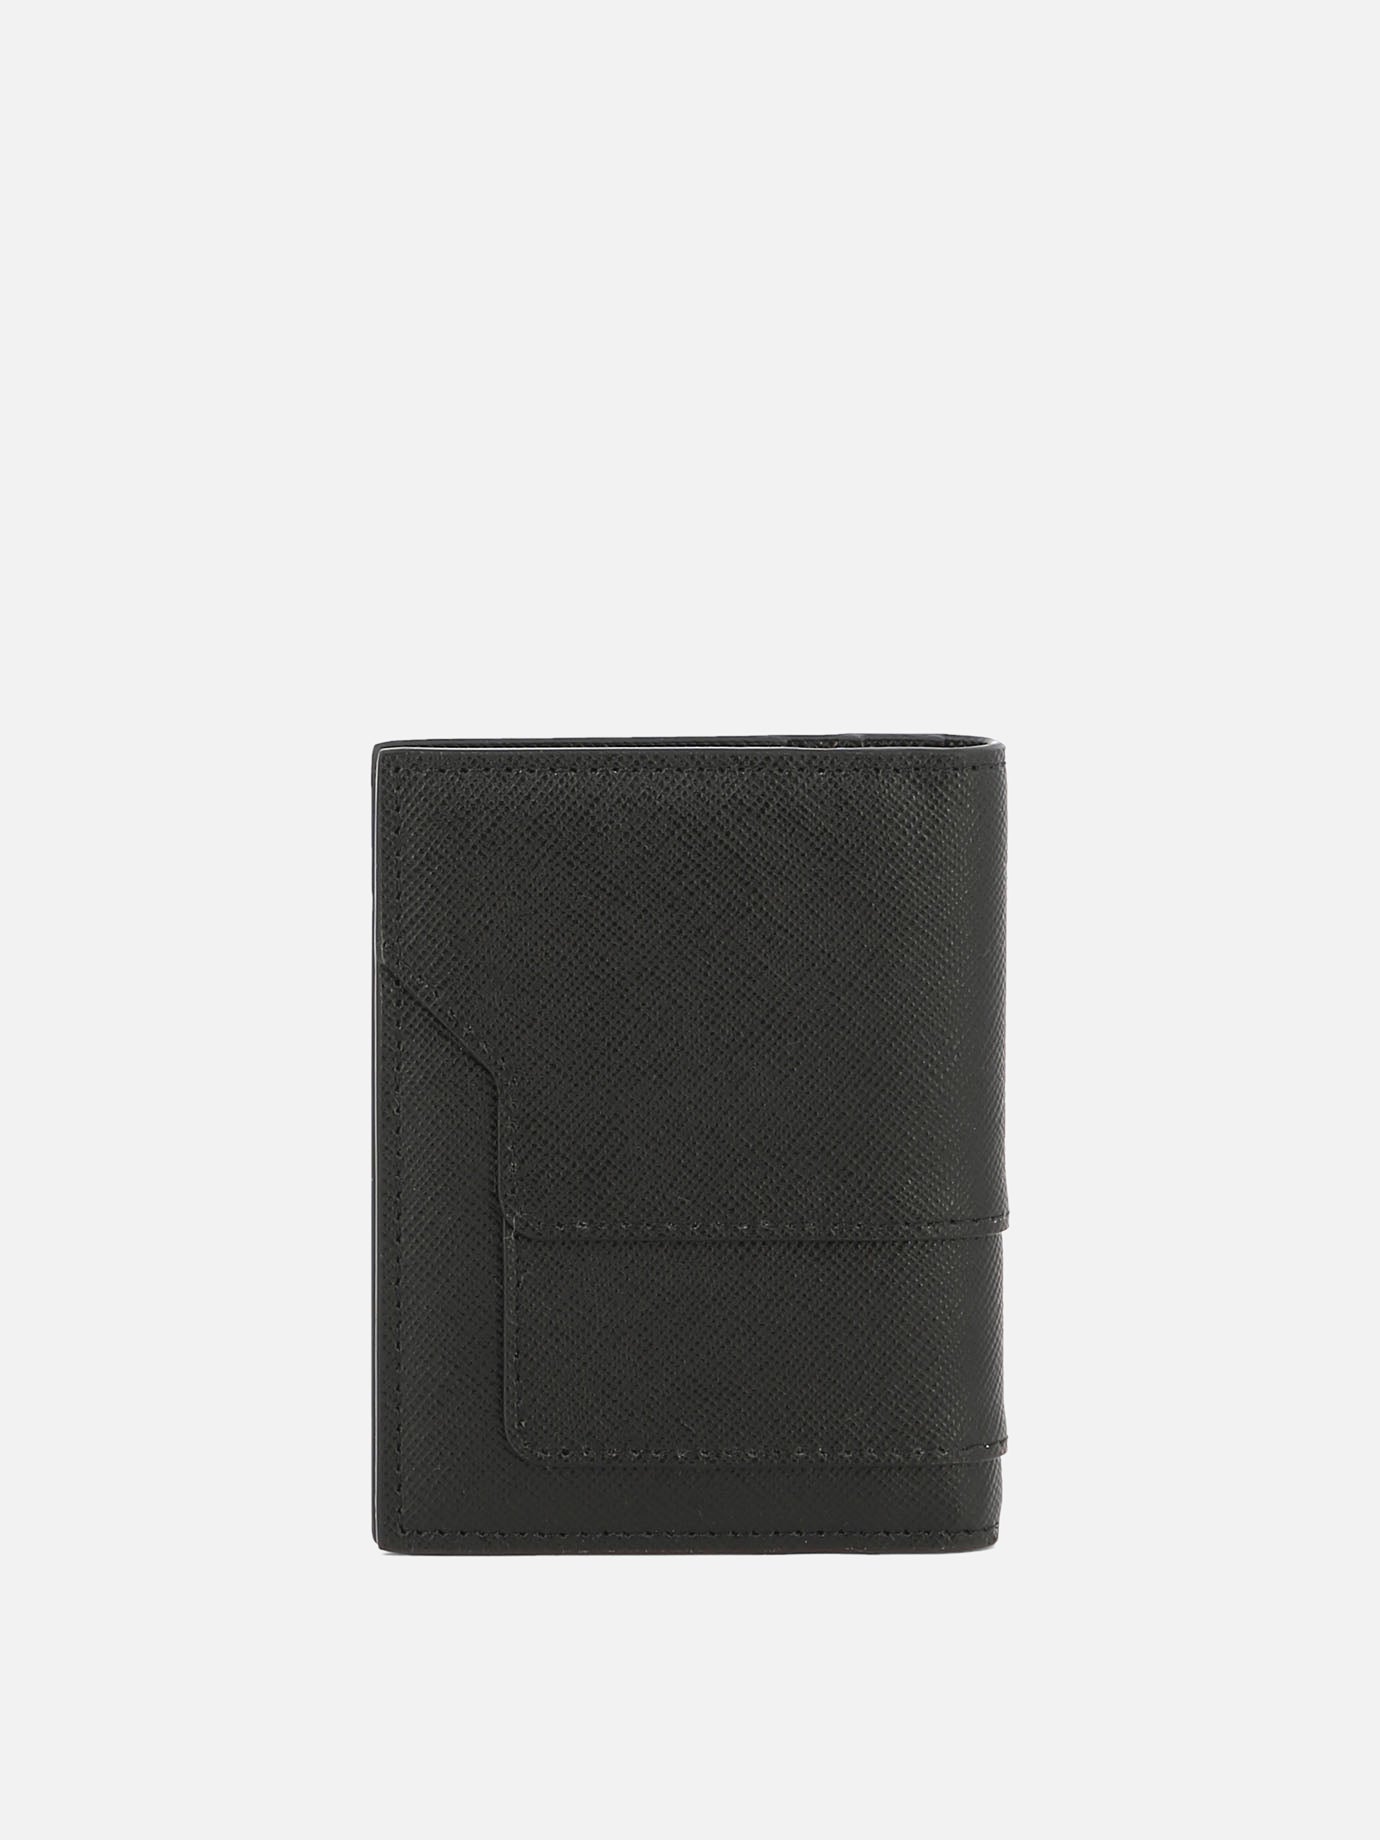 Saffiano leather cardholder